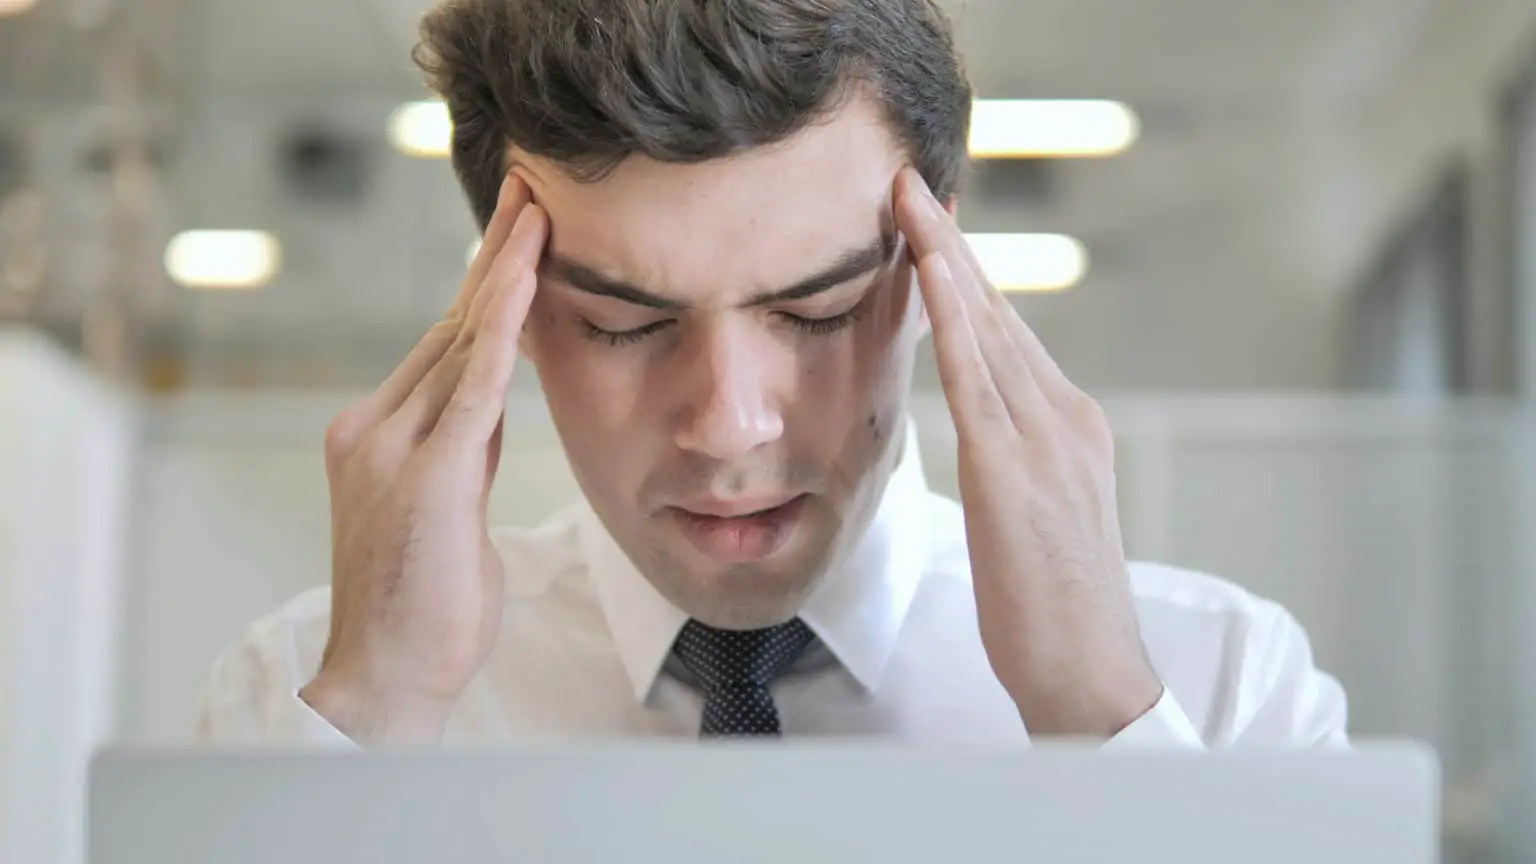 Can Neck Pain Cause Bad Headaches?